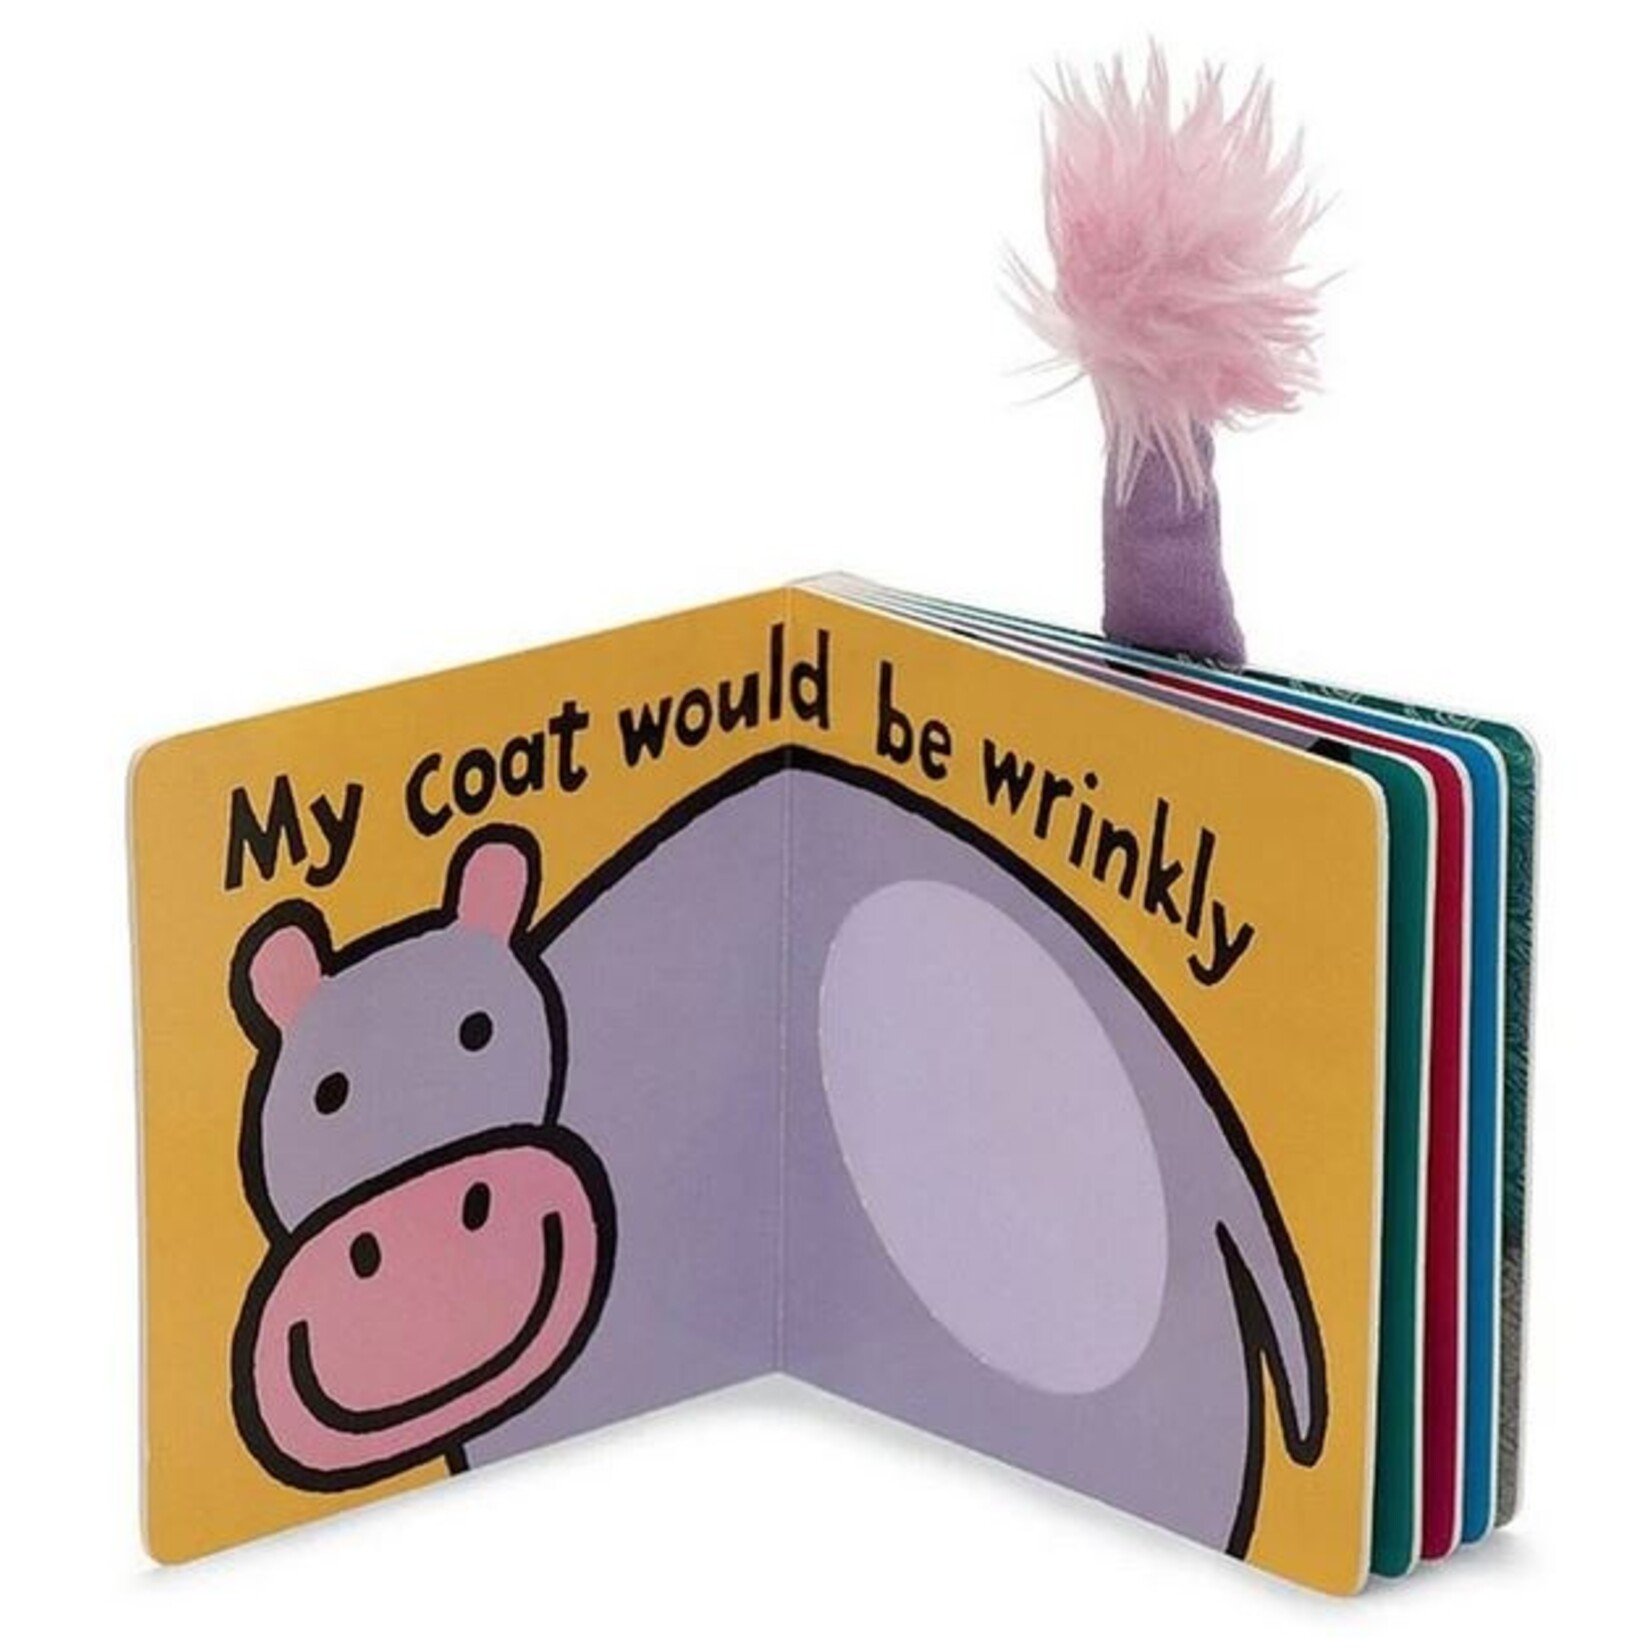 Jellycat Bashful Hippo Book